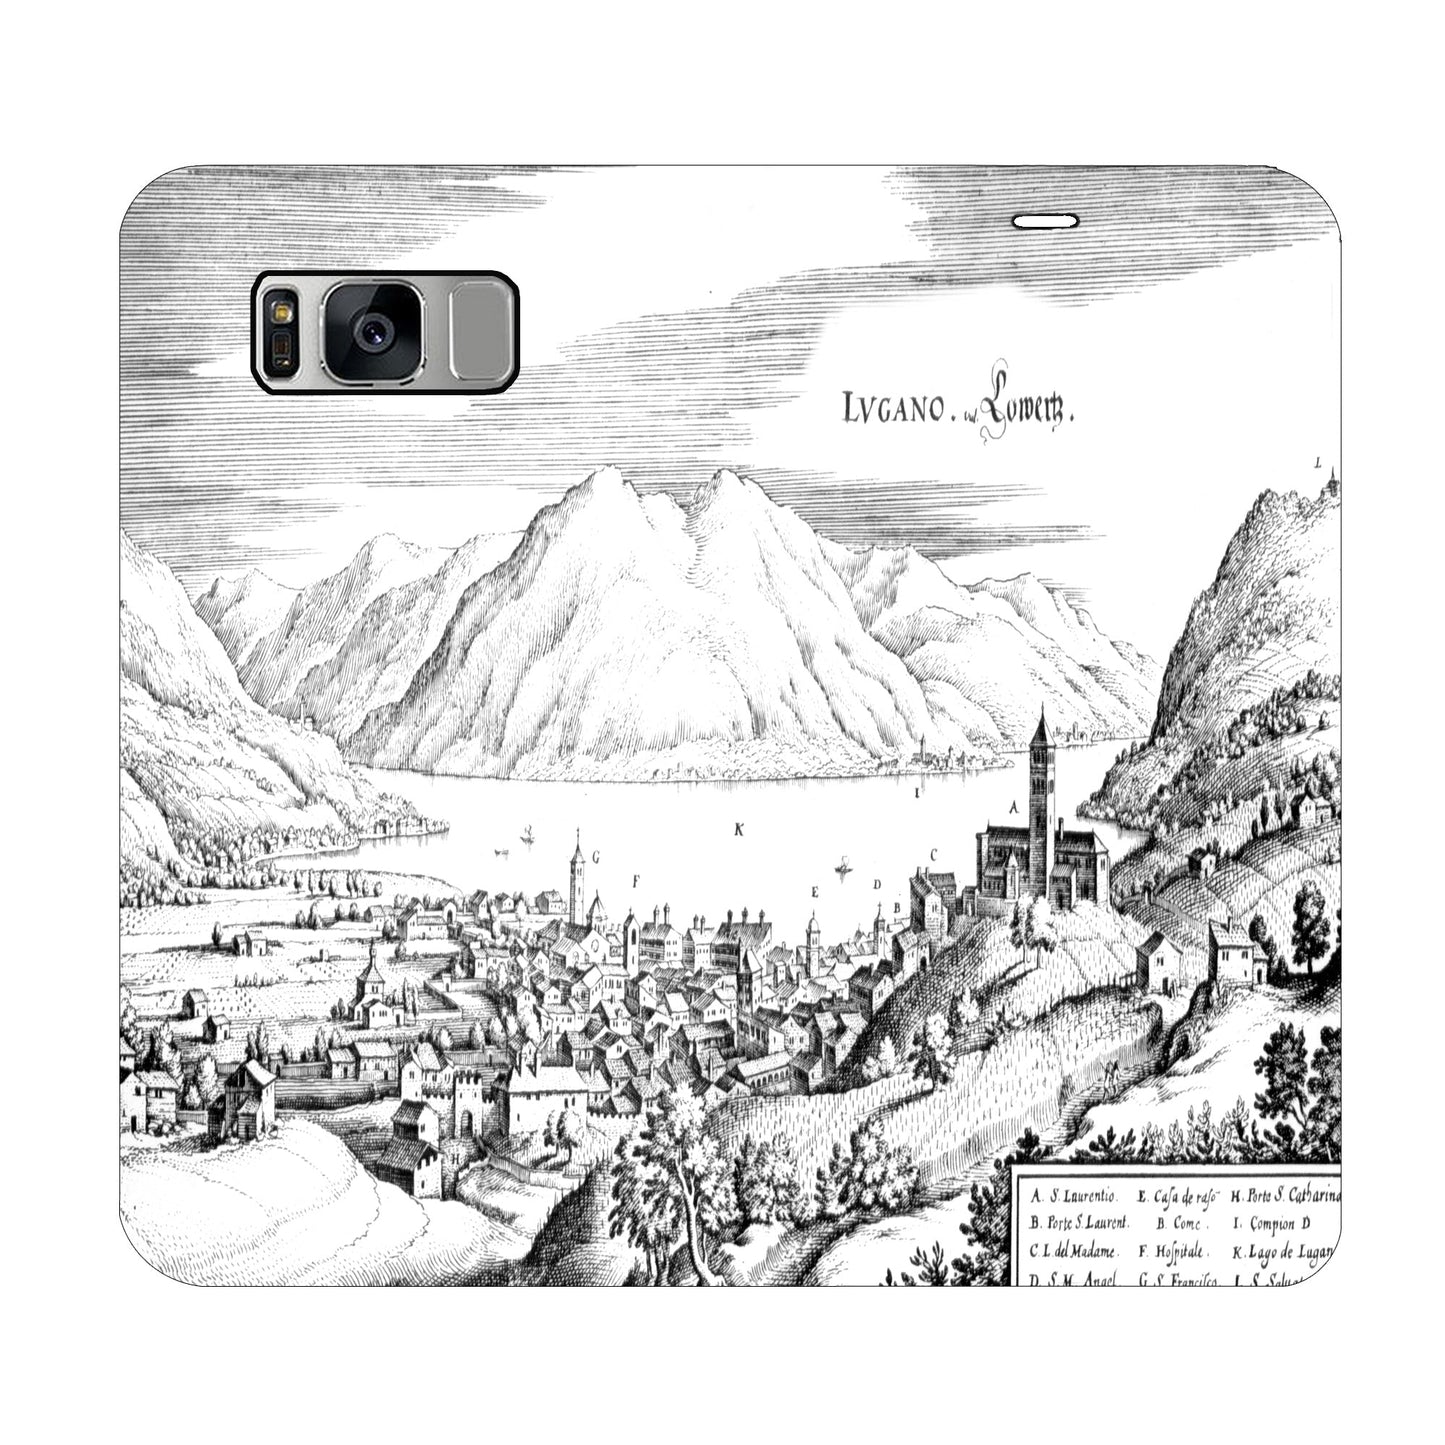 Lugano Merian Panorama Case für Samsung Galaxy S8